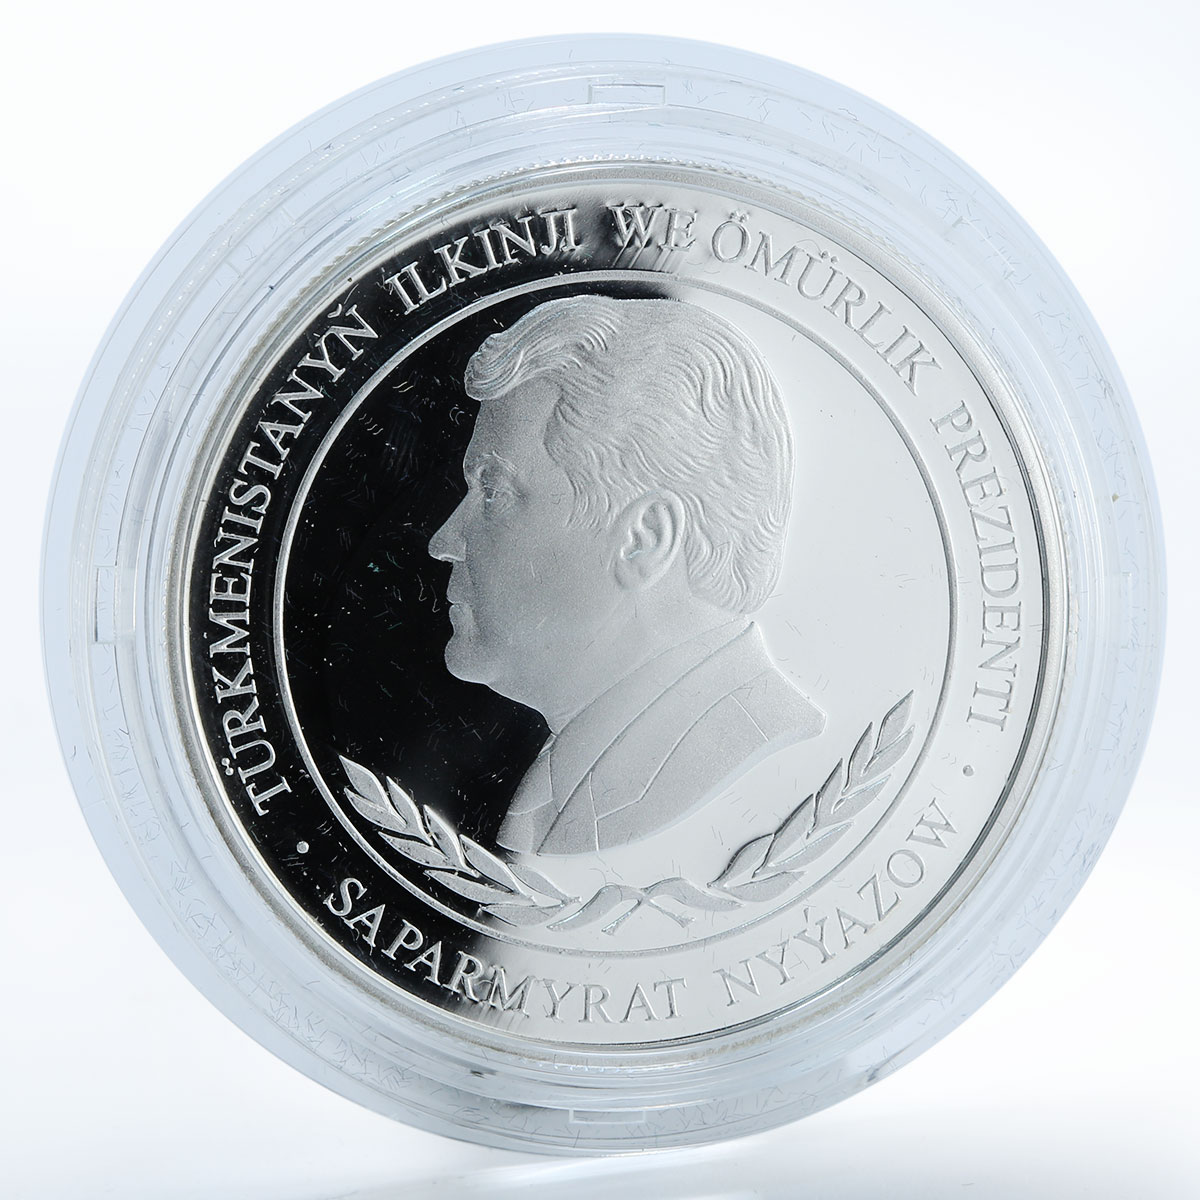 Turkmenistan 500 manat Artogrul Gazy proof silver coin 2001